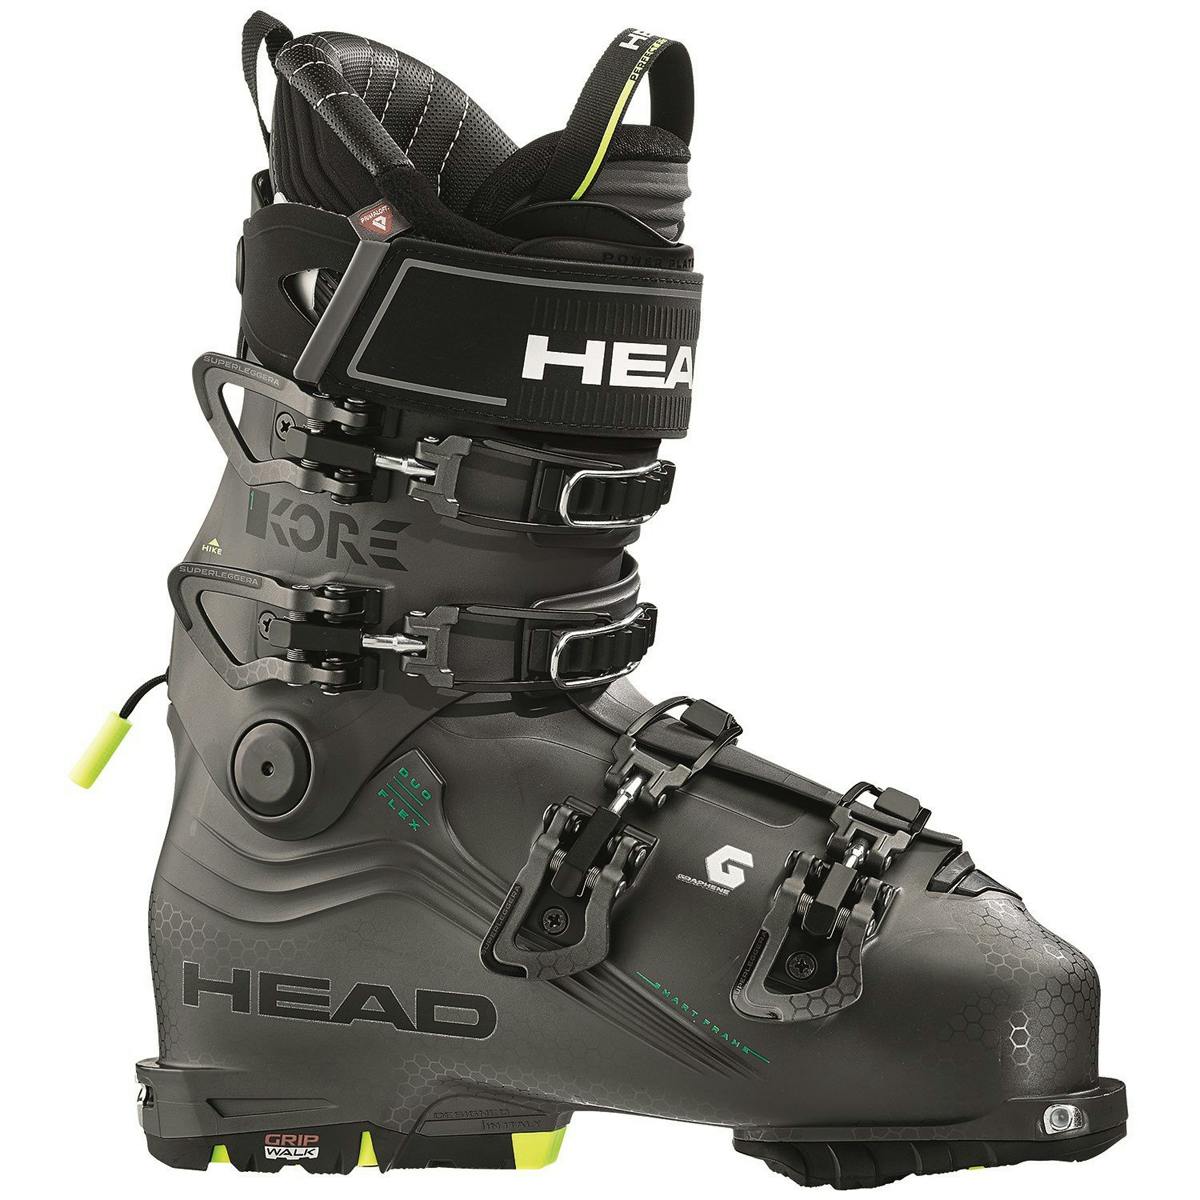 Head Kore 1 Ski Boots · 2020